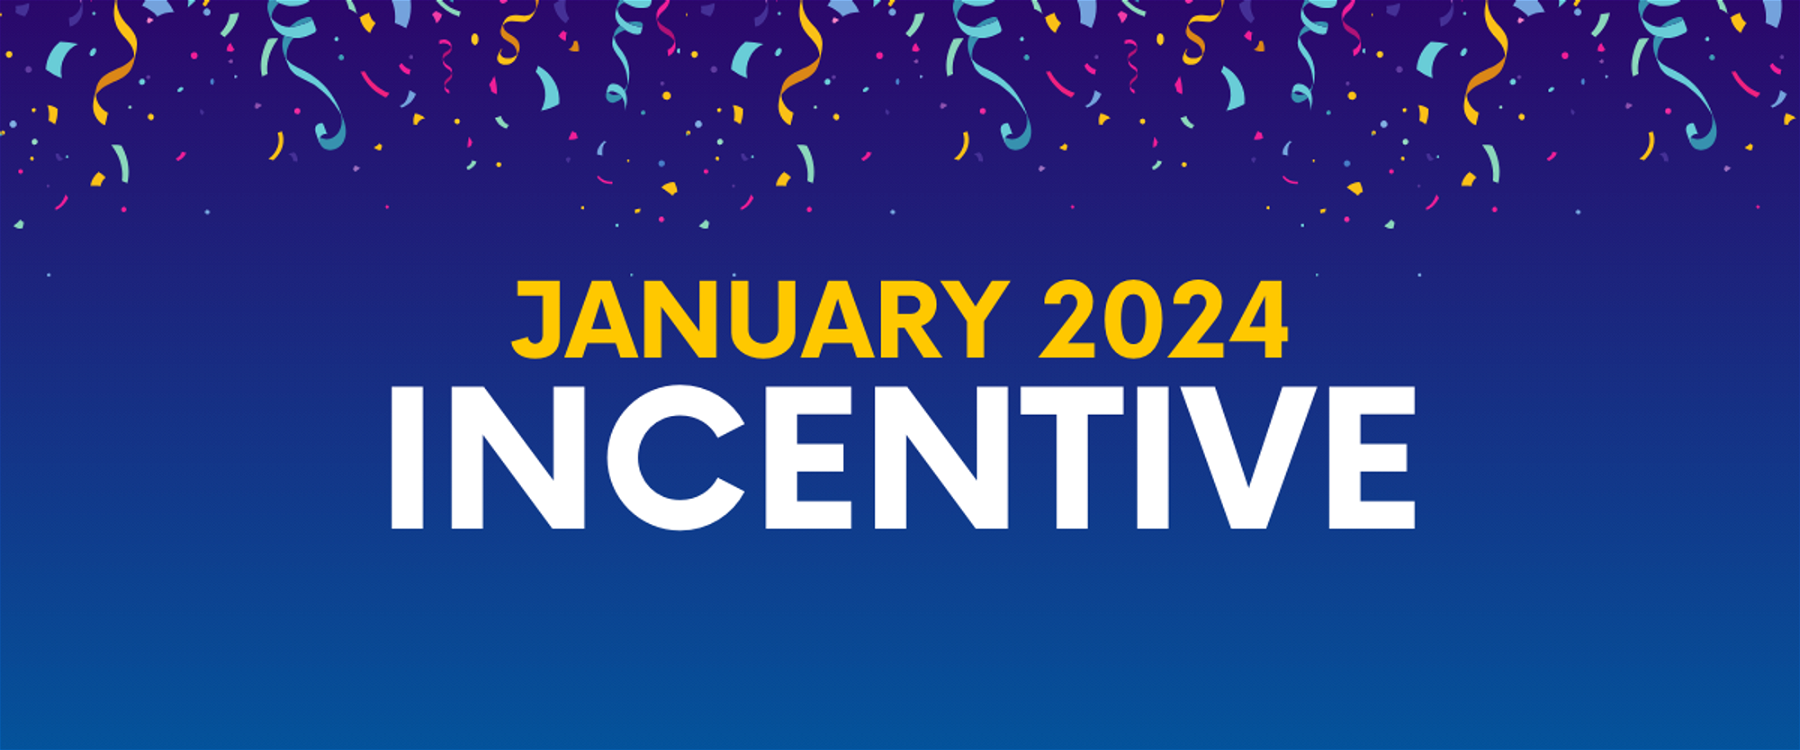 January 2024 Incentive